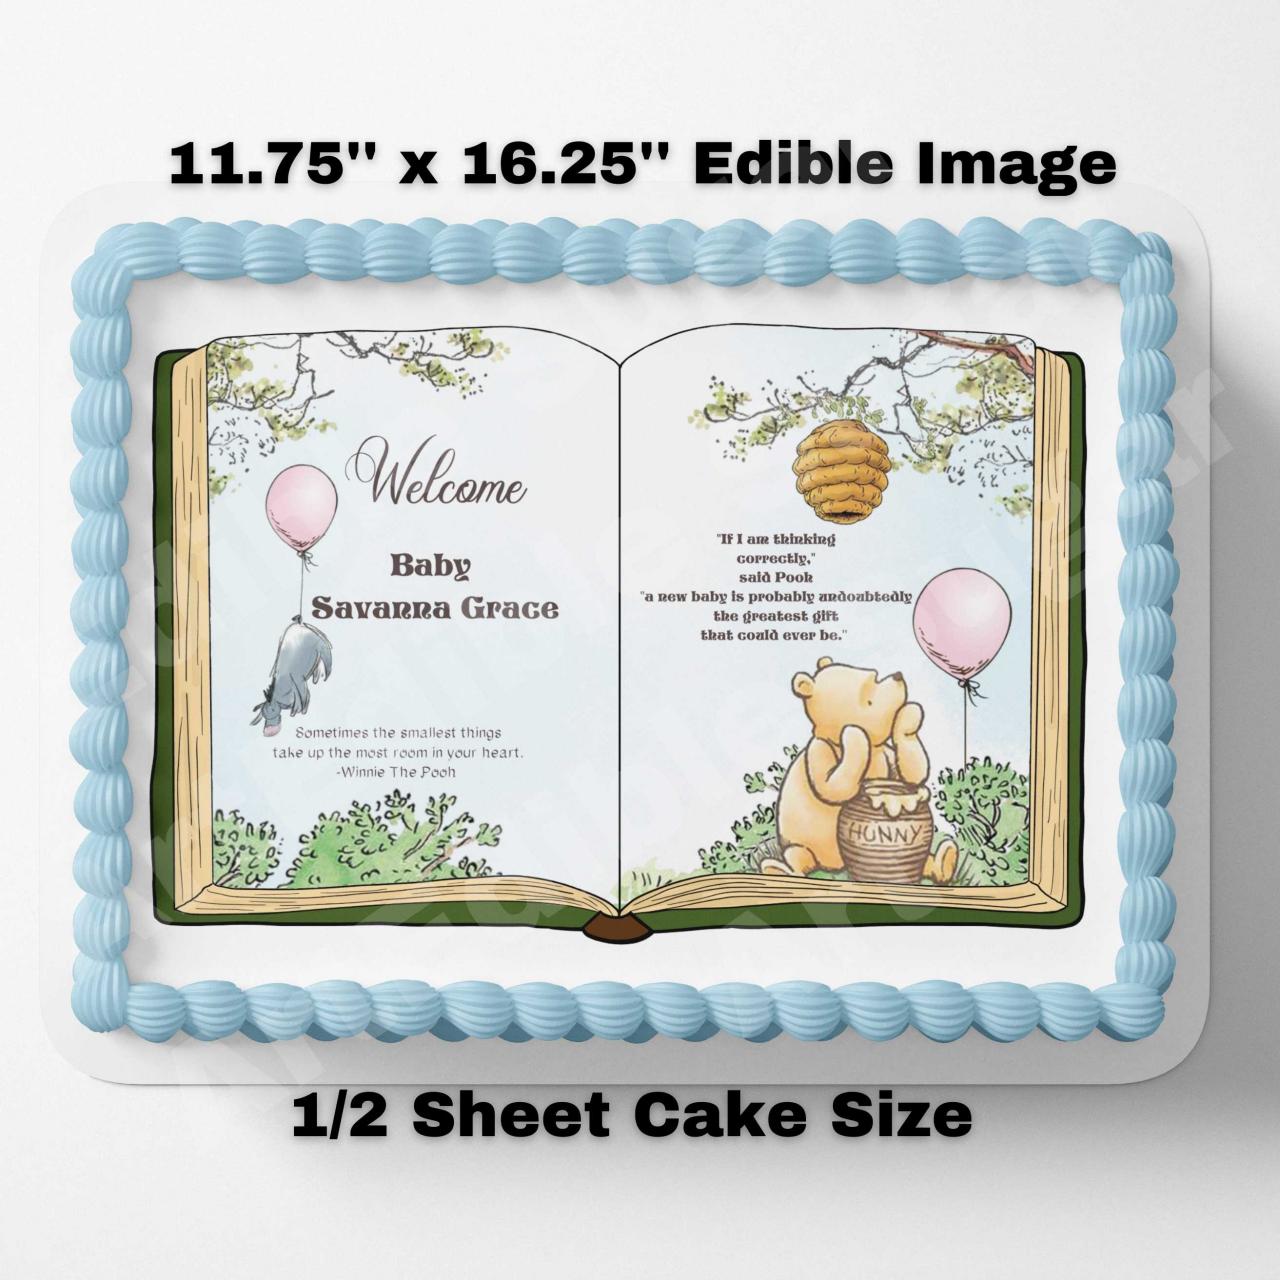 Pooh Bear Baby Shower Cake Topper Edible Image, Pooh Bear Decoration,s Pooh Bear Party Pooh Bear Cake